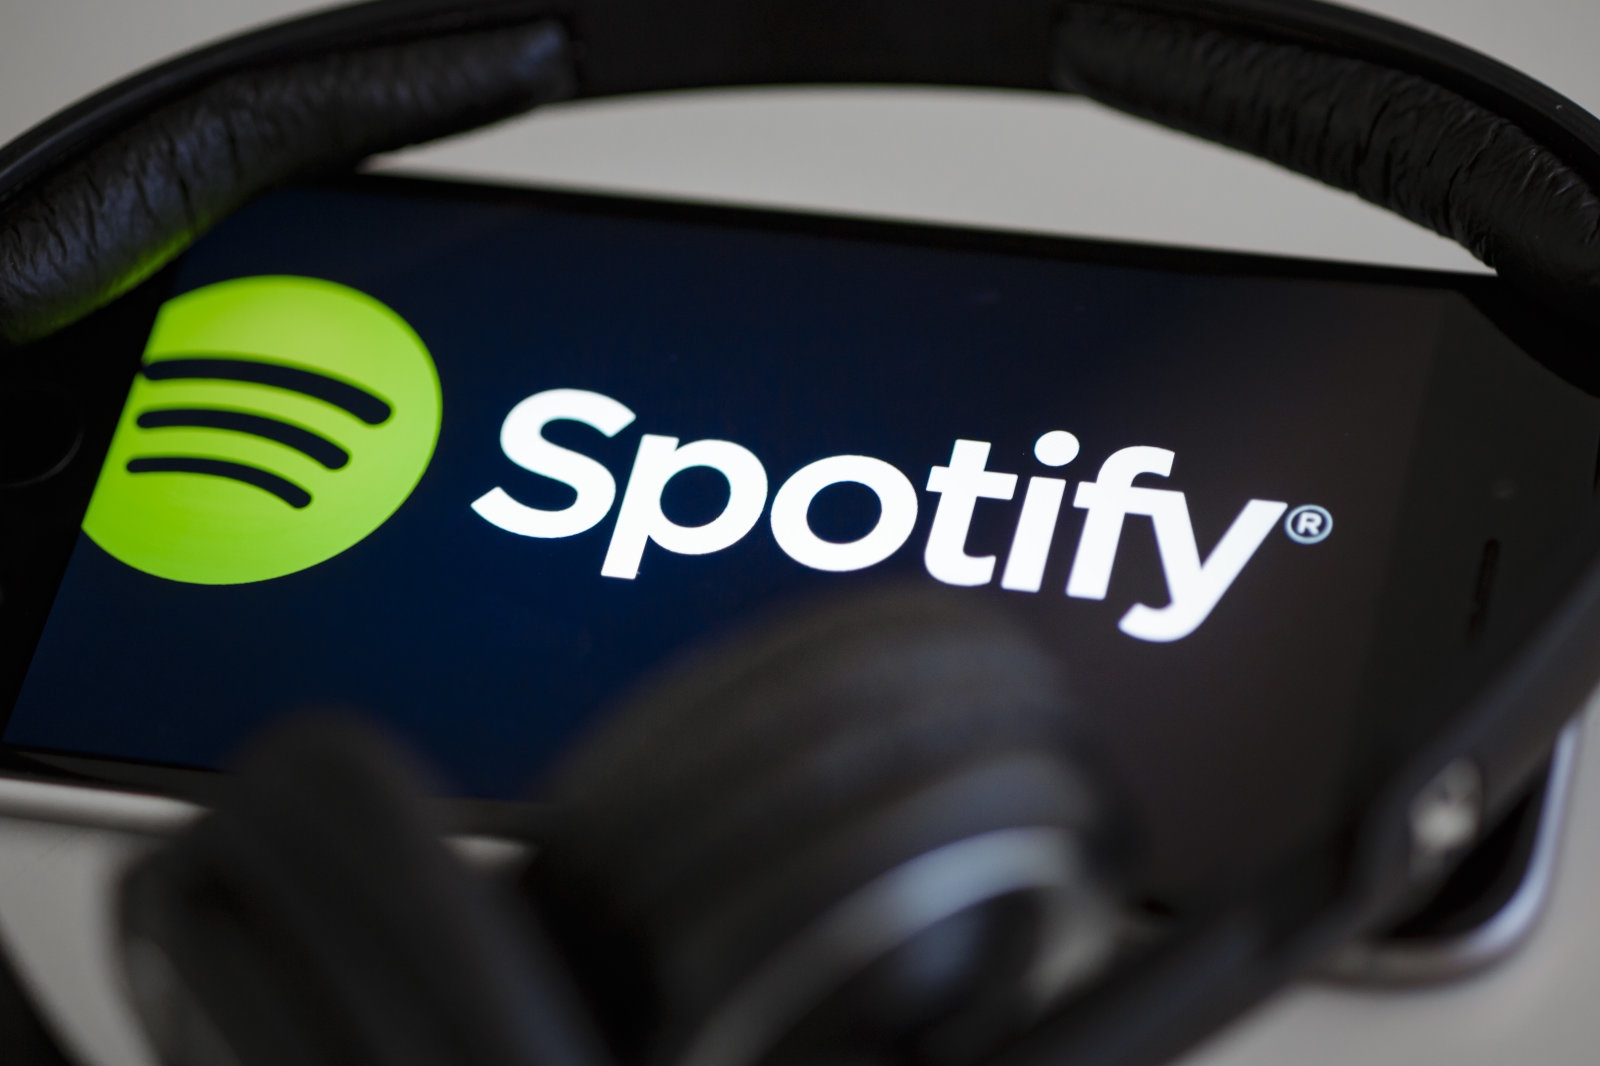 Spotify Bersiap Masuk Ke Bursa Saham Lewat Direct Listing Secara Langsung